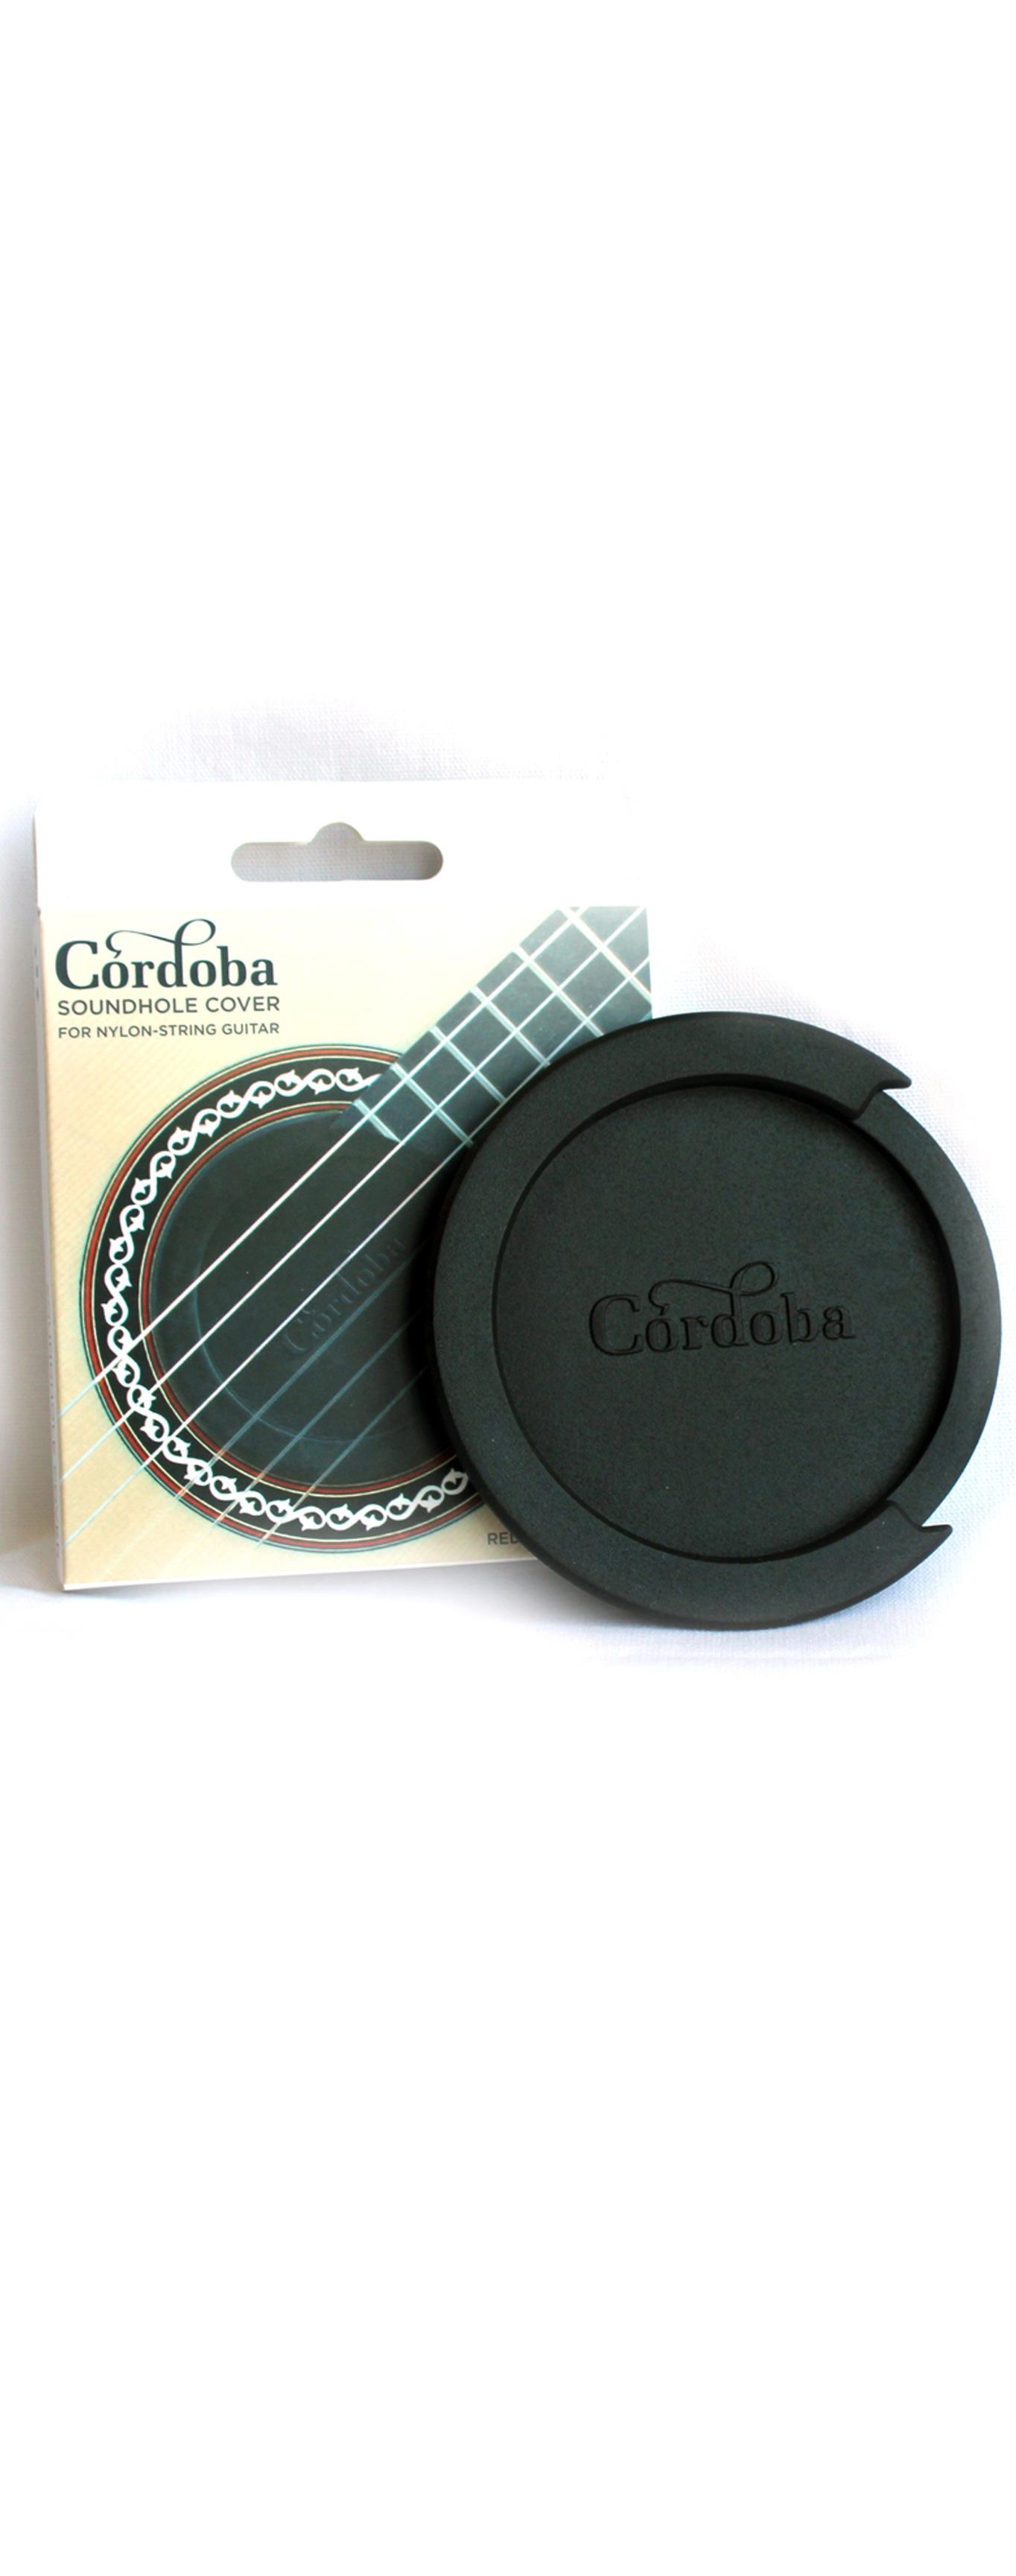 Cordoba Soundhole Cover - Acoustic sound control - Variation 1